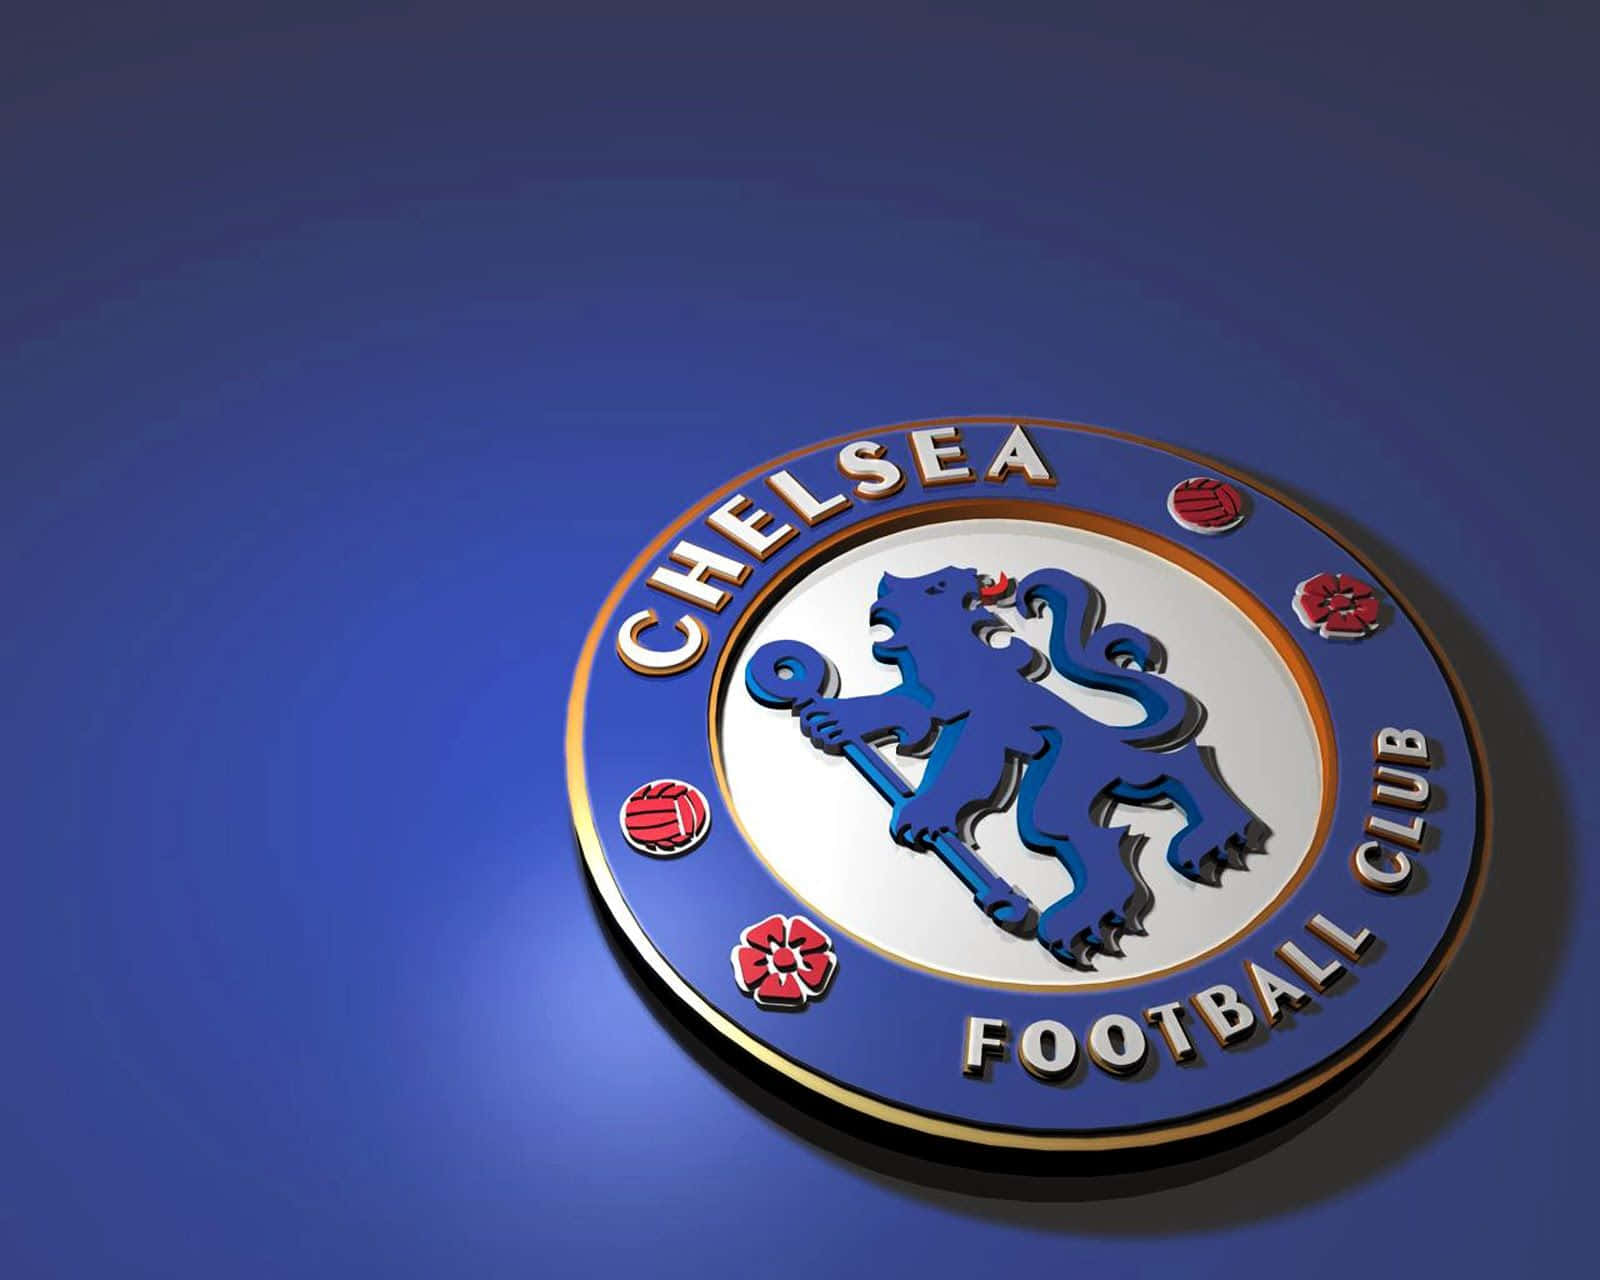 Chelsea Football Club 3D Logo Background